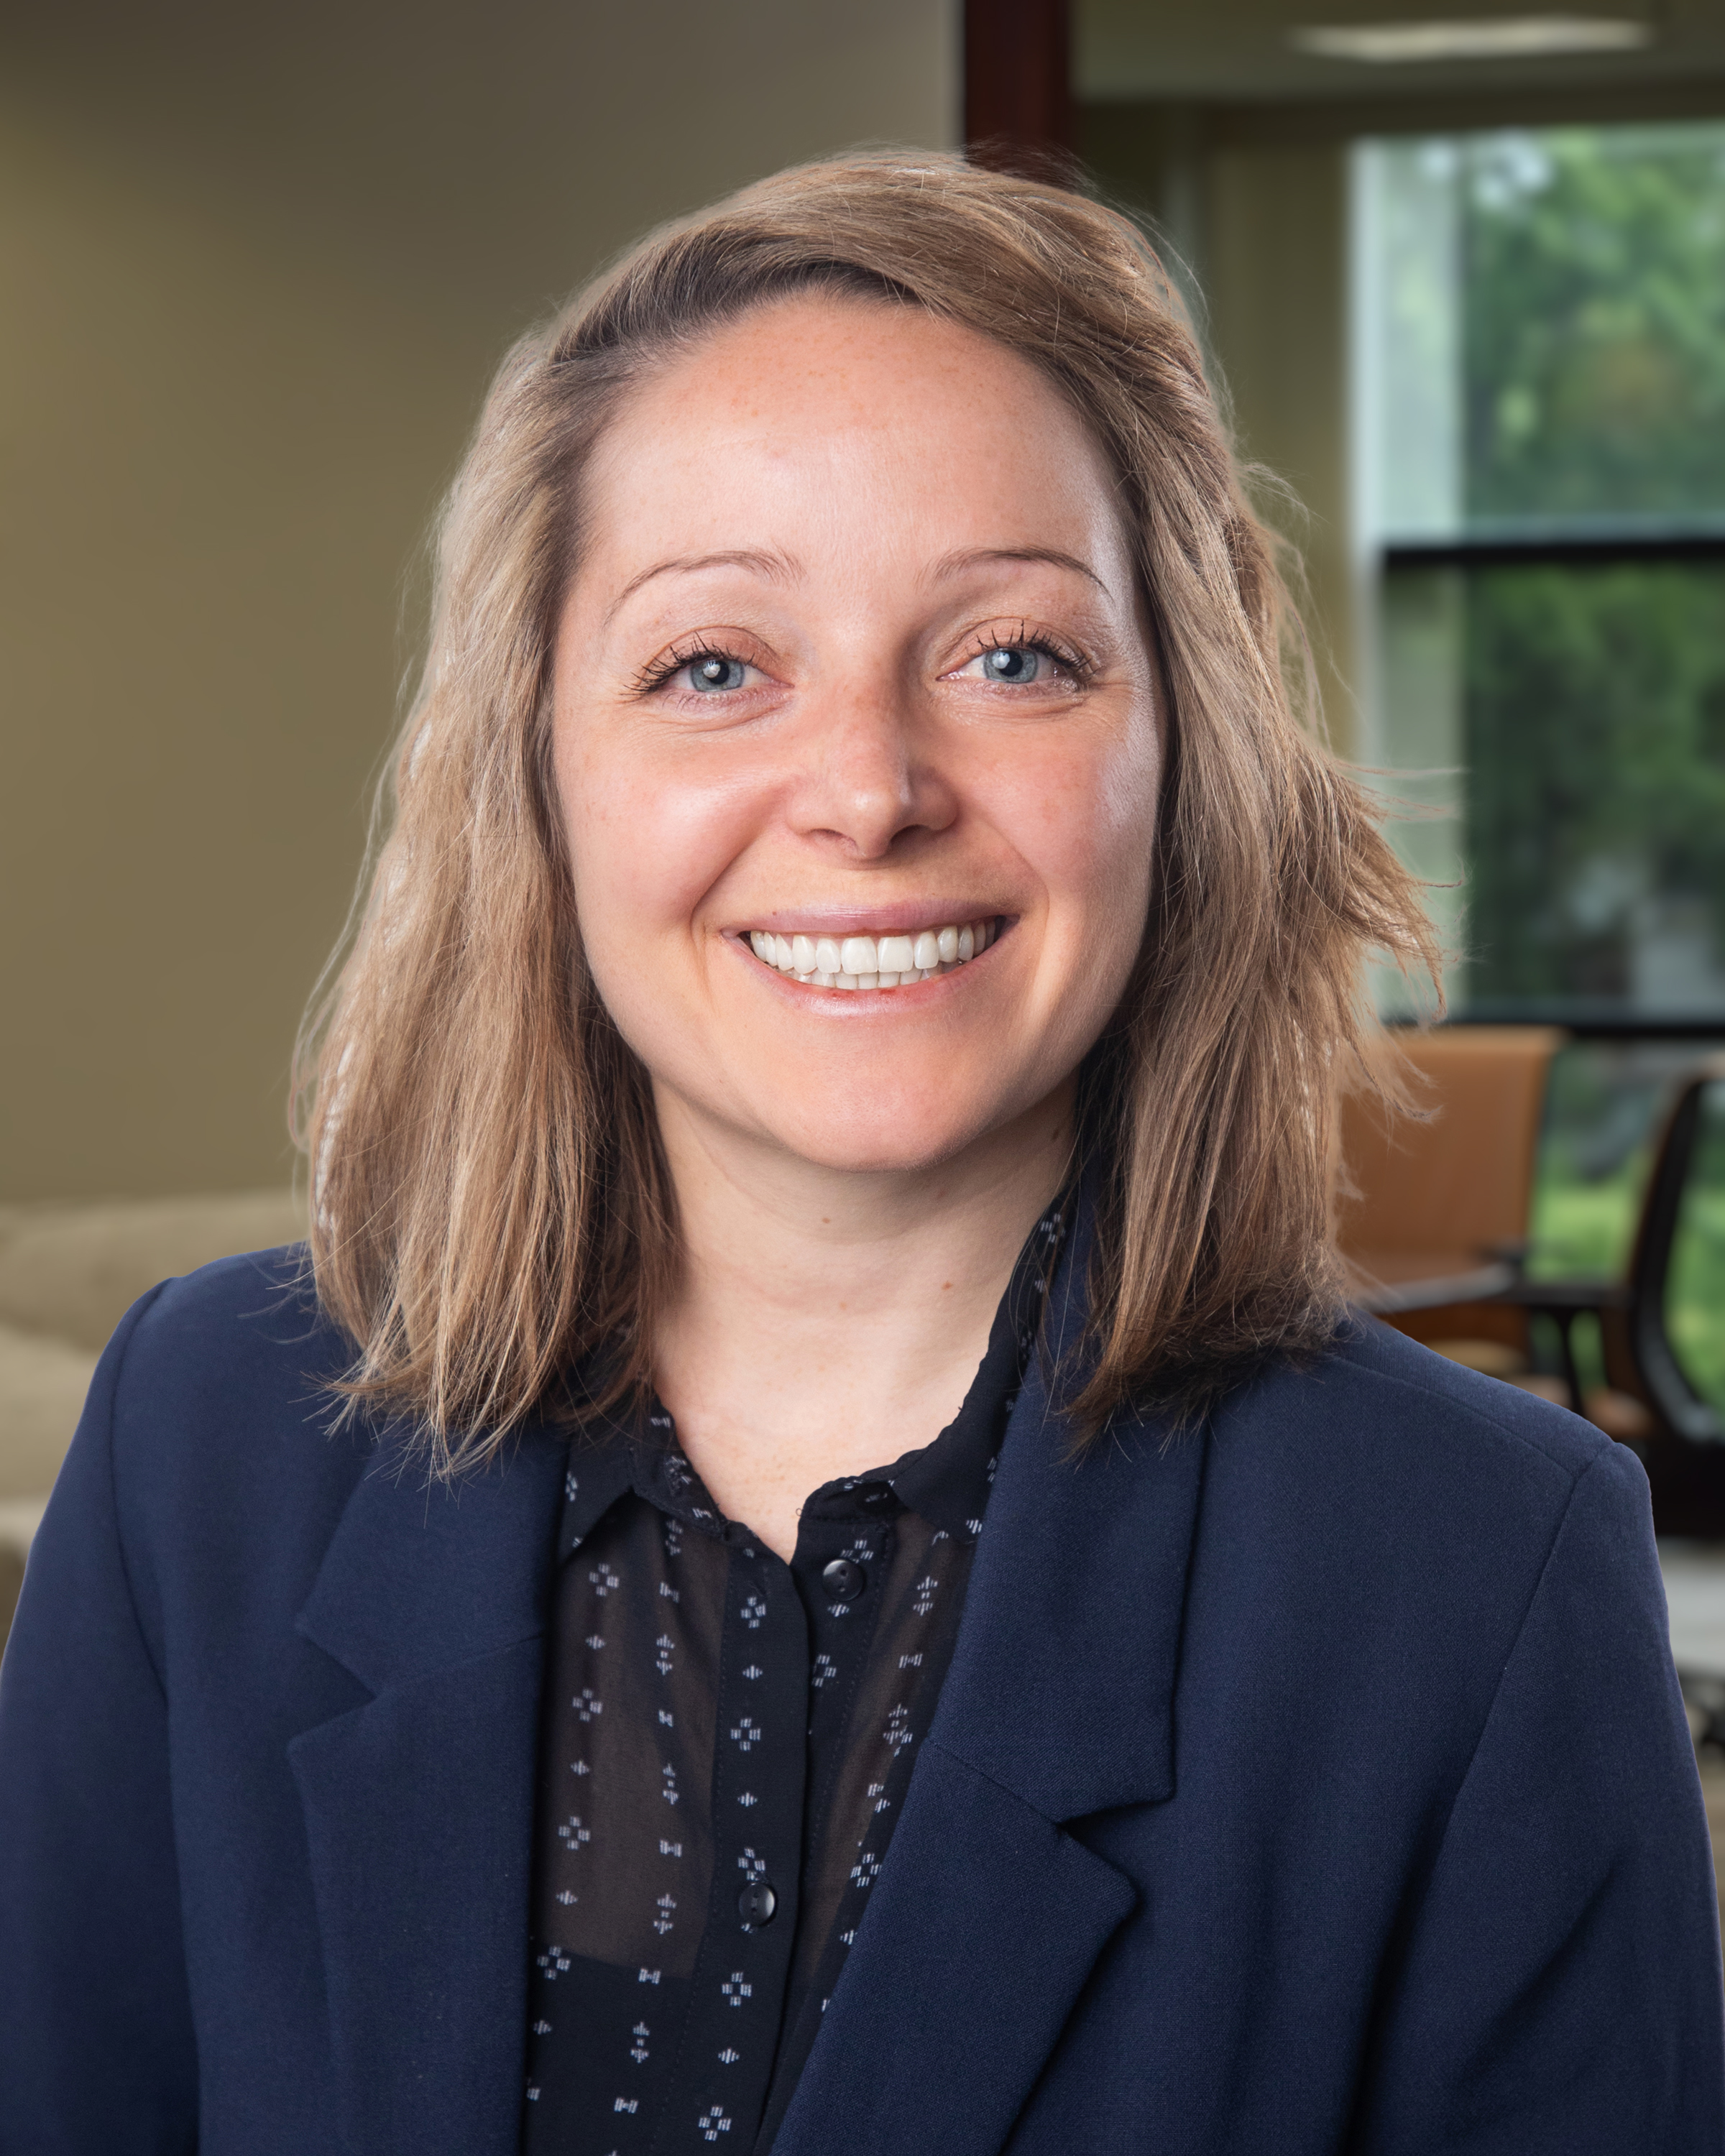 Rachel Deick, Manager of Vocational Case Management for Allsup Employment Services